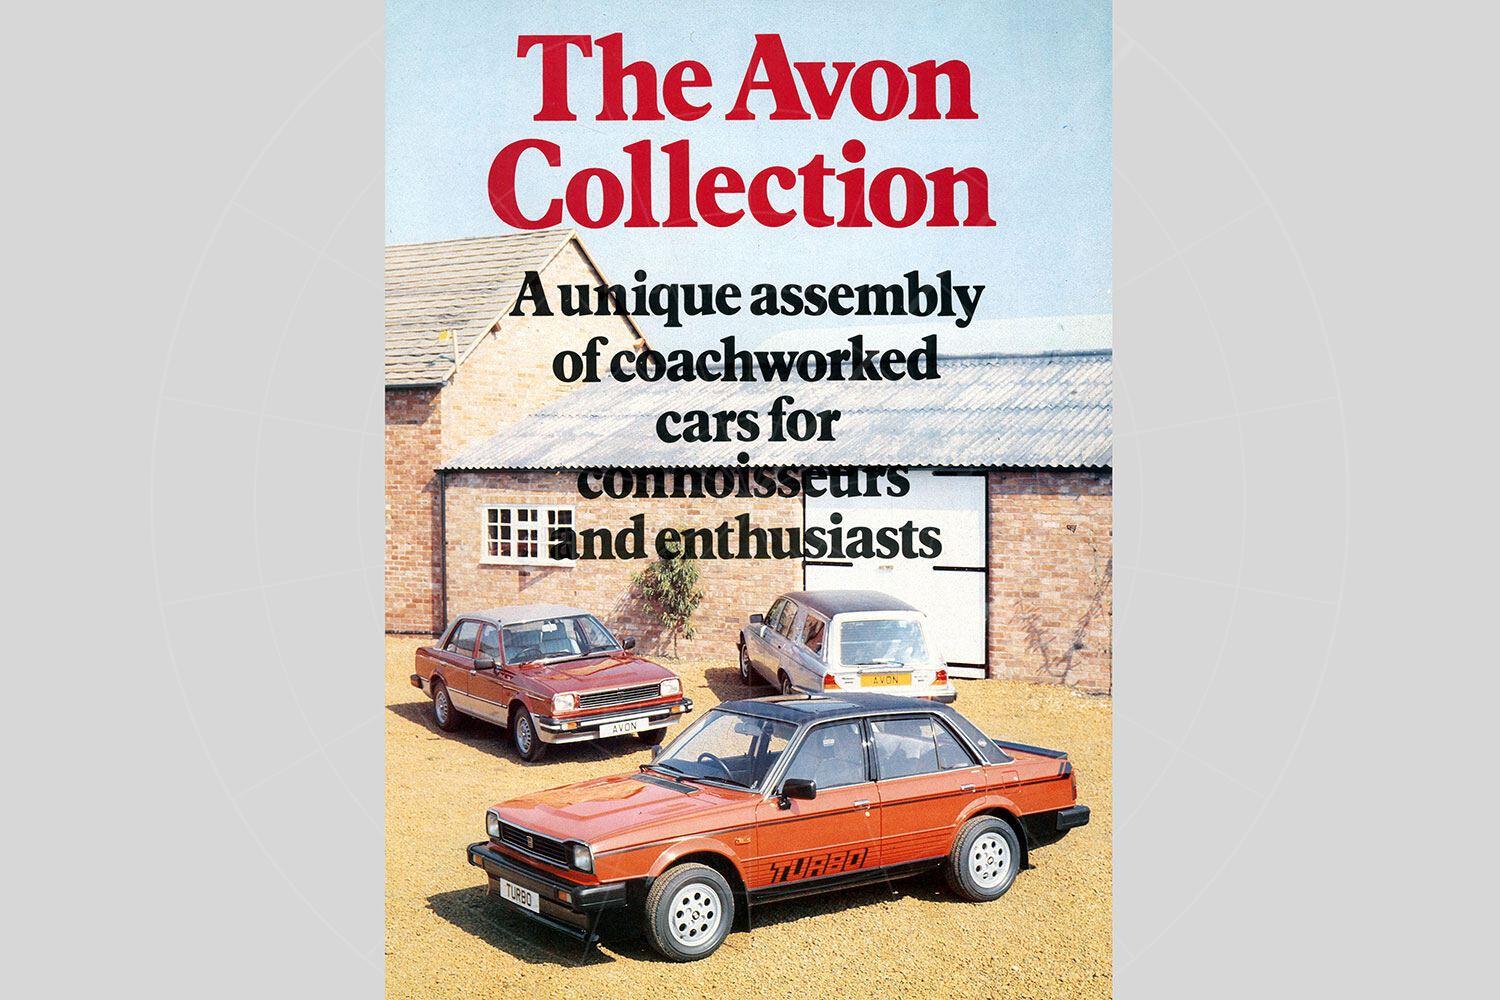 The Avon Triumph Acclaim brochure Pic: magiccarpics.co.uk | The Avon Triumph Acclaim brochure